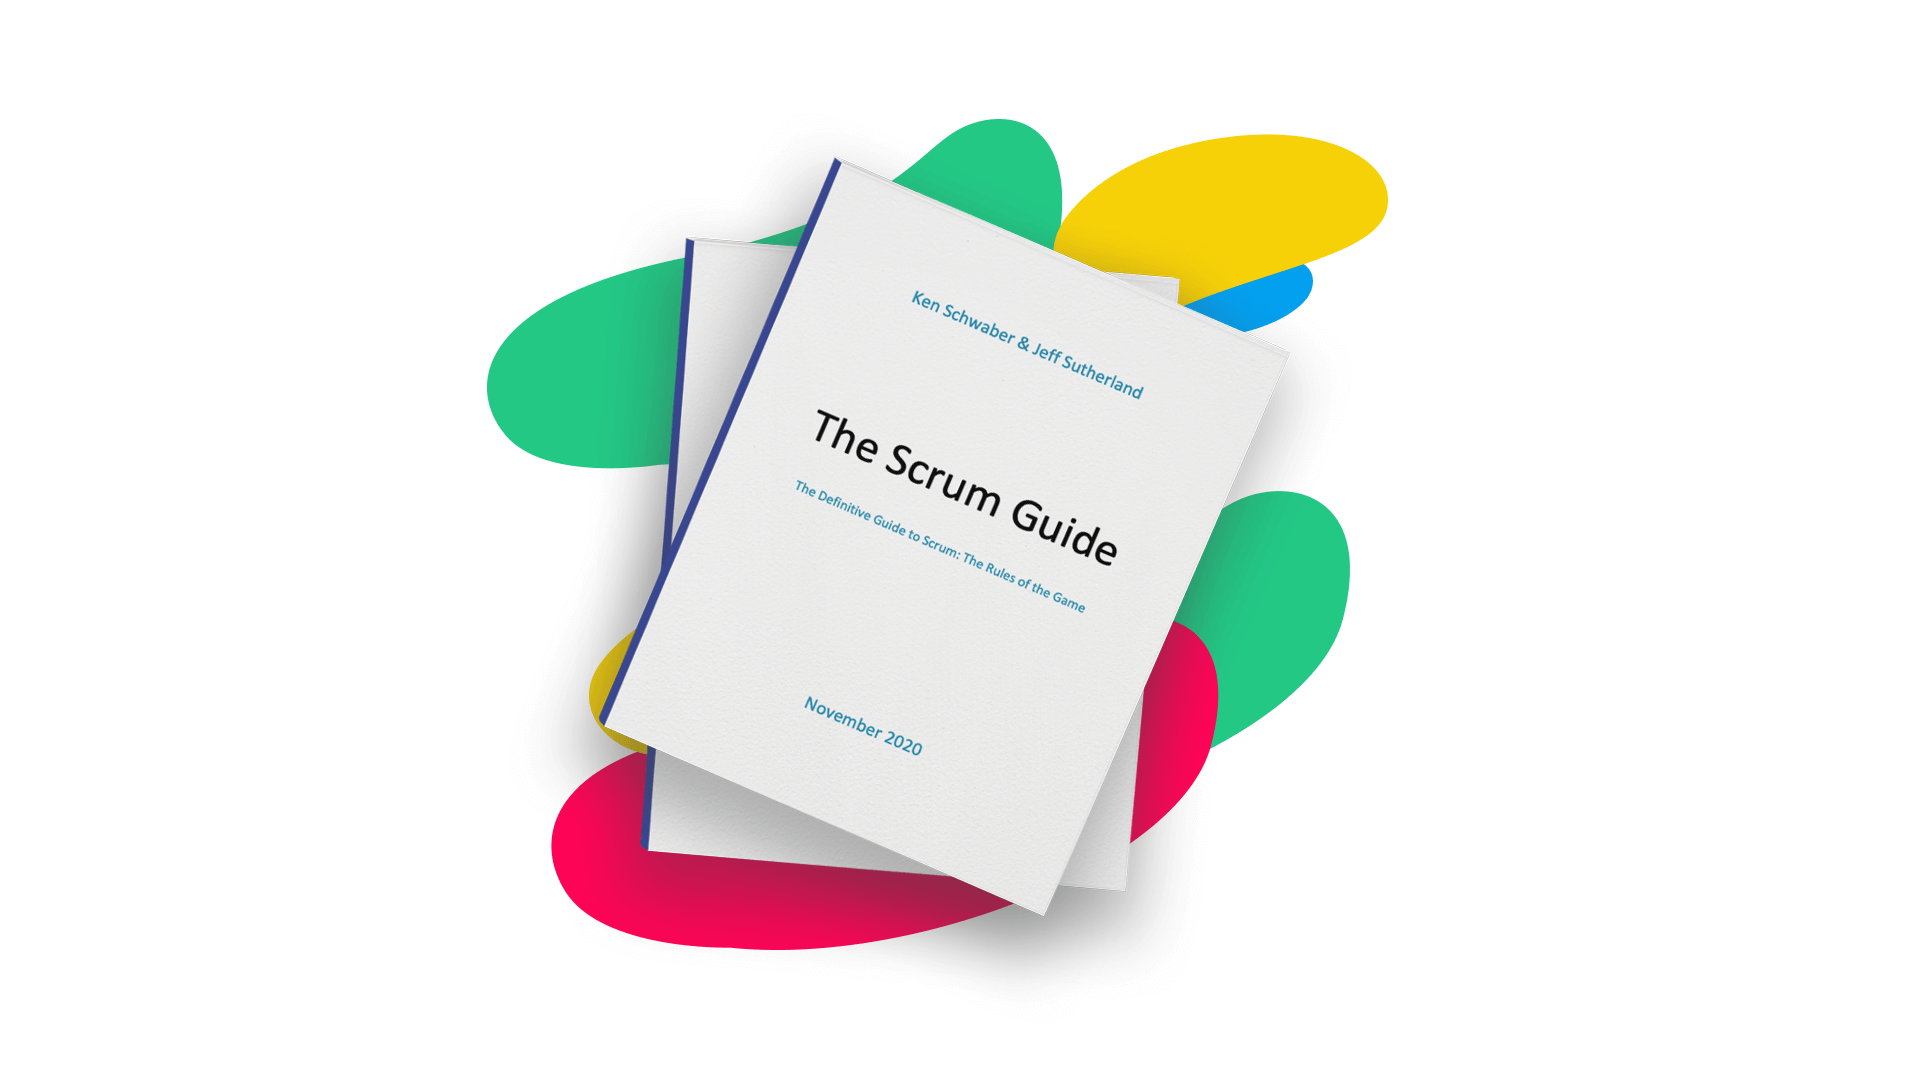 The Scrum Guide book cover